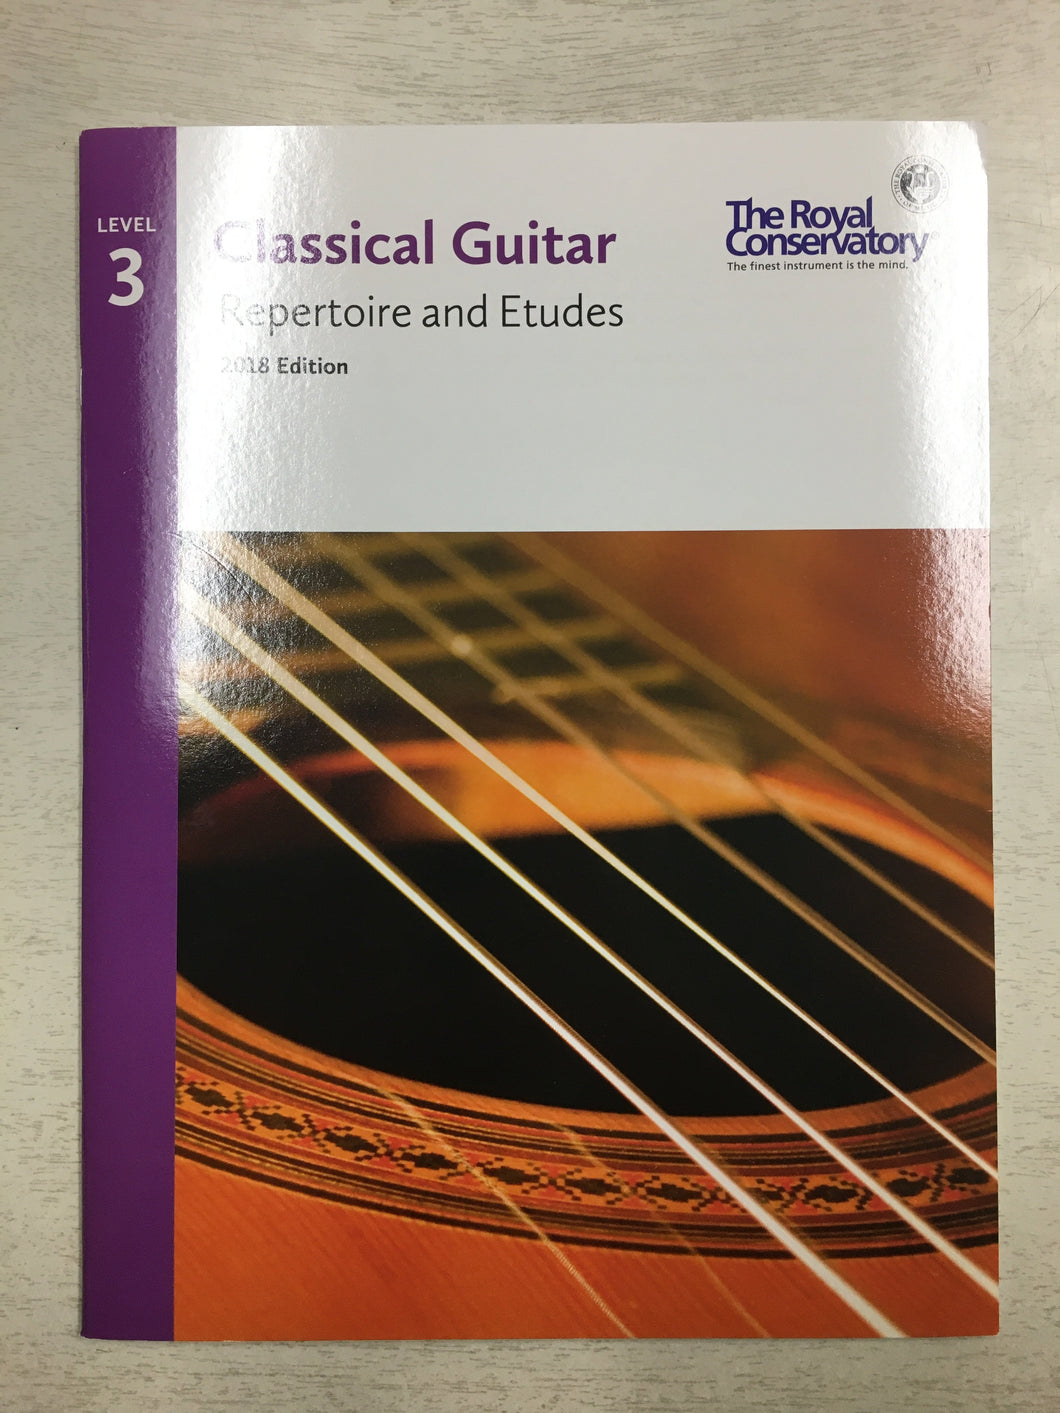 Classical Guitar Series RCM, 2018 Edition: Repertoire and Etudes 3